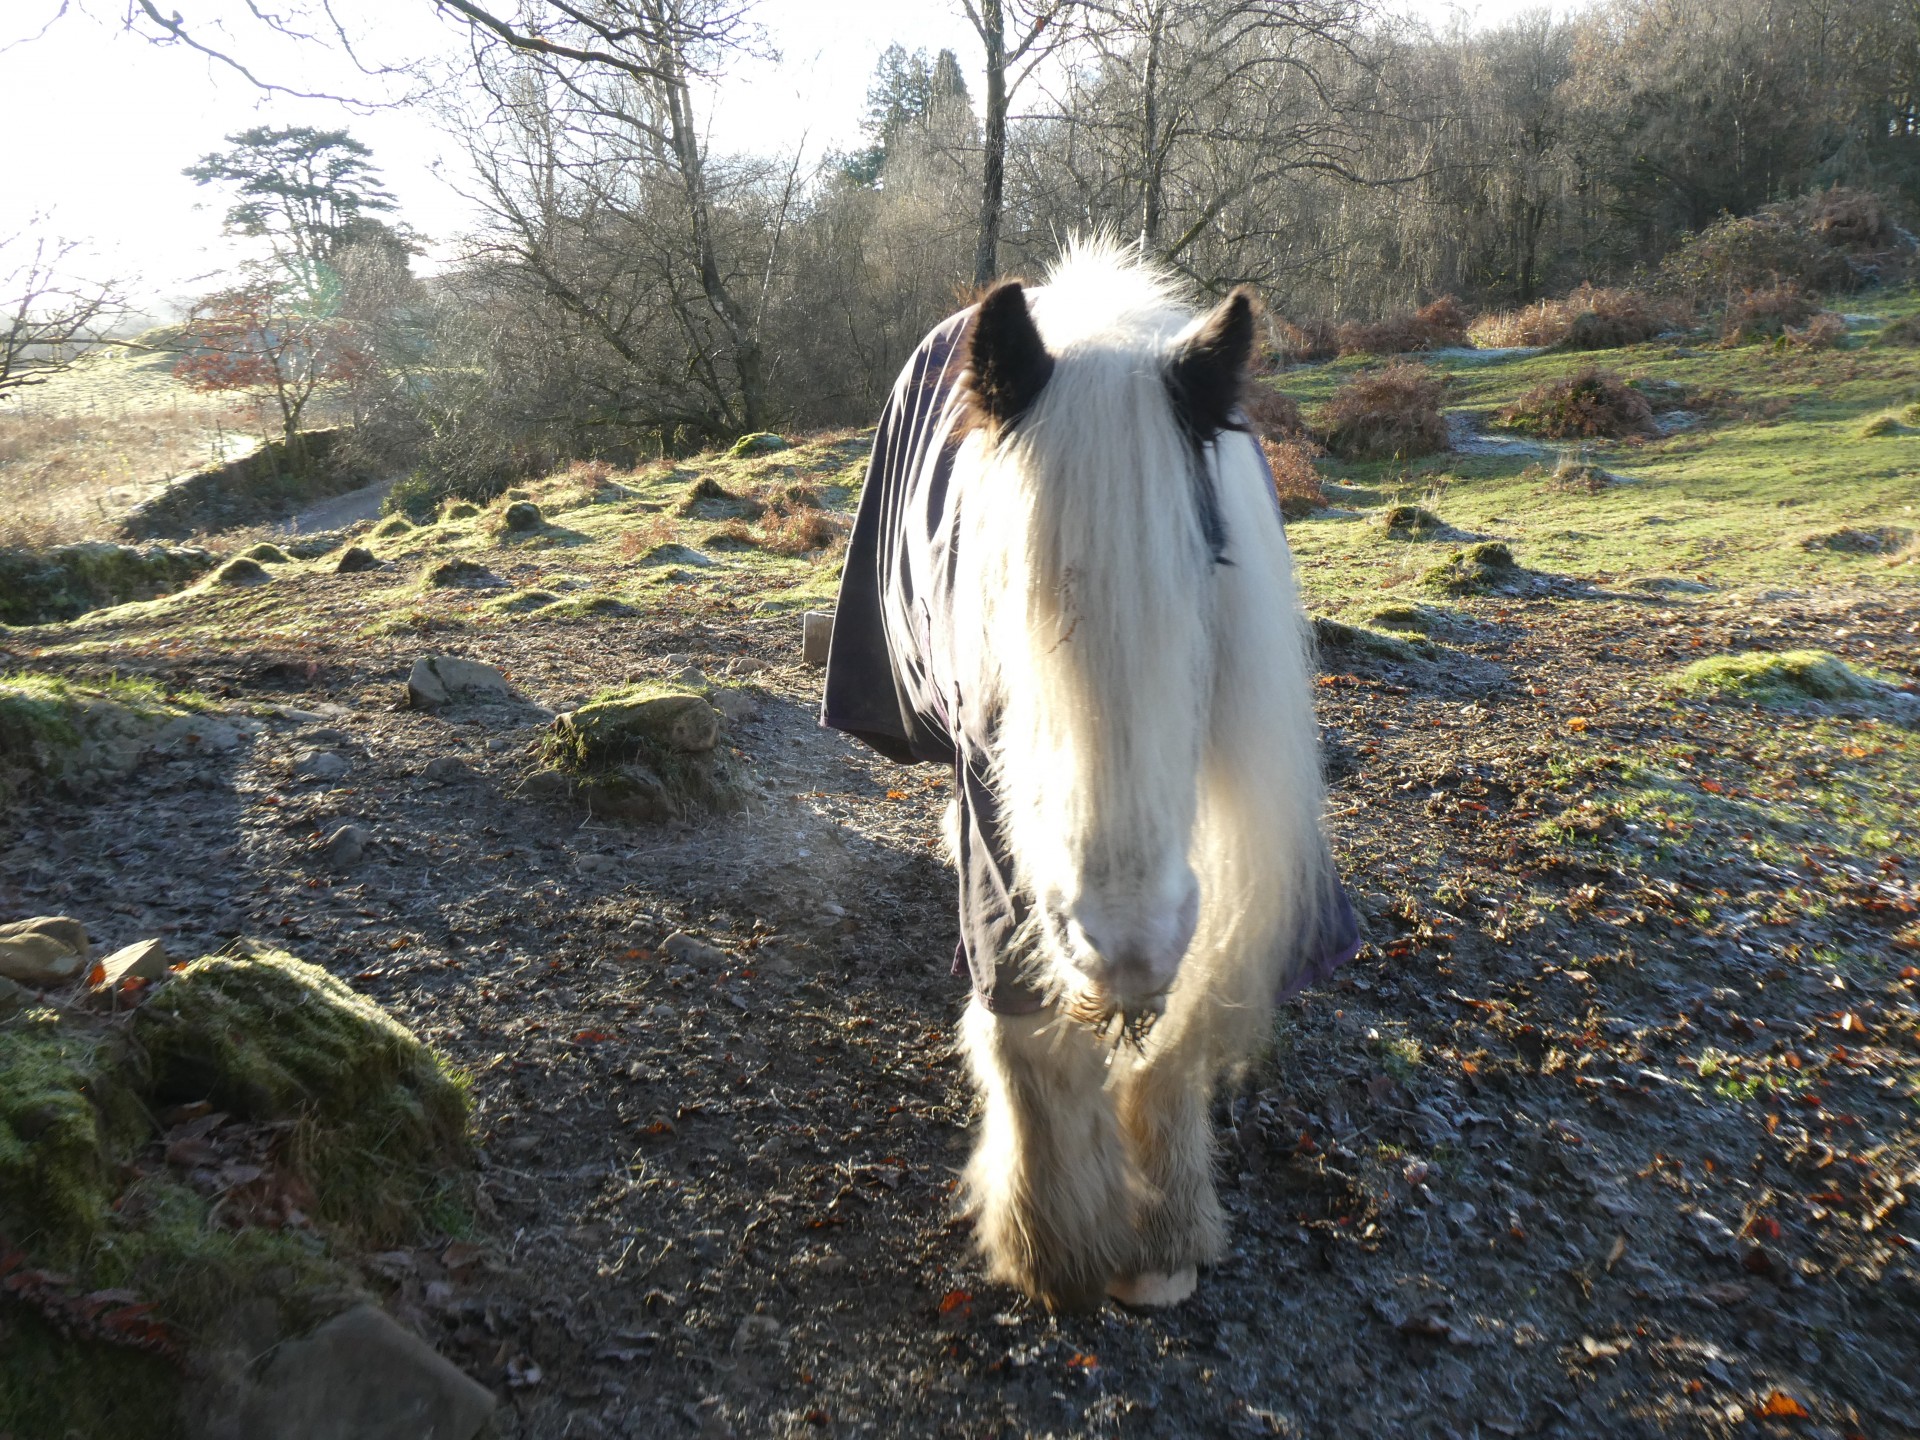 A friendly old pony